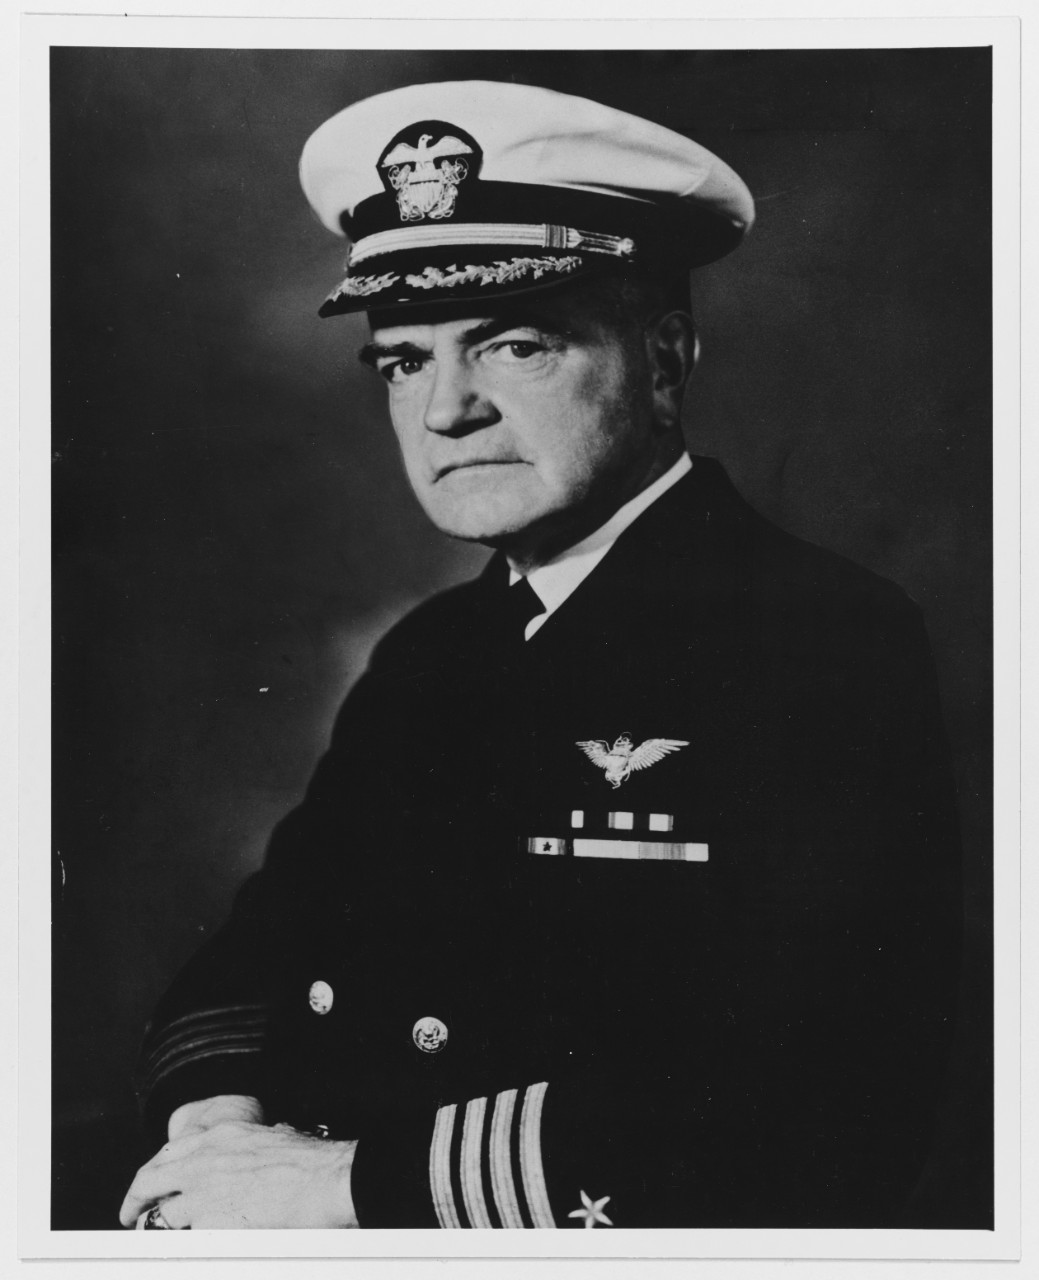 William F. Halsey, Jr. Captain, U.S. Navy